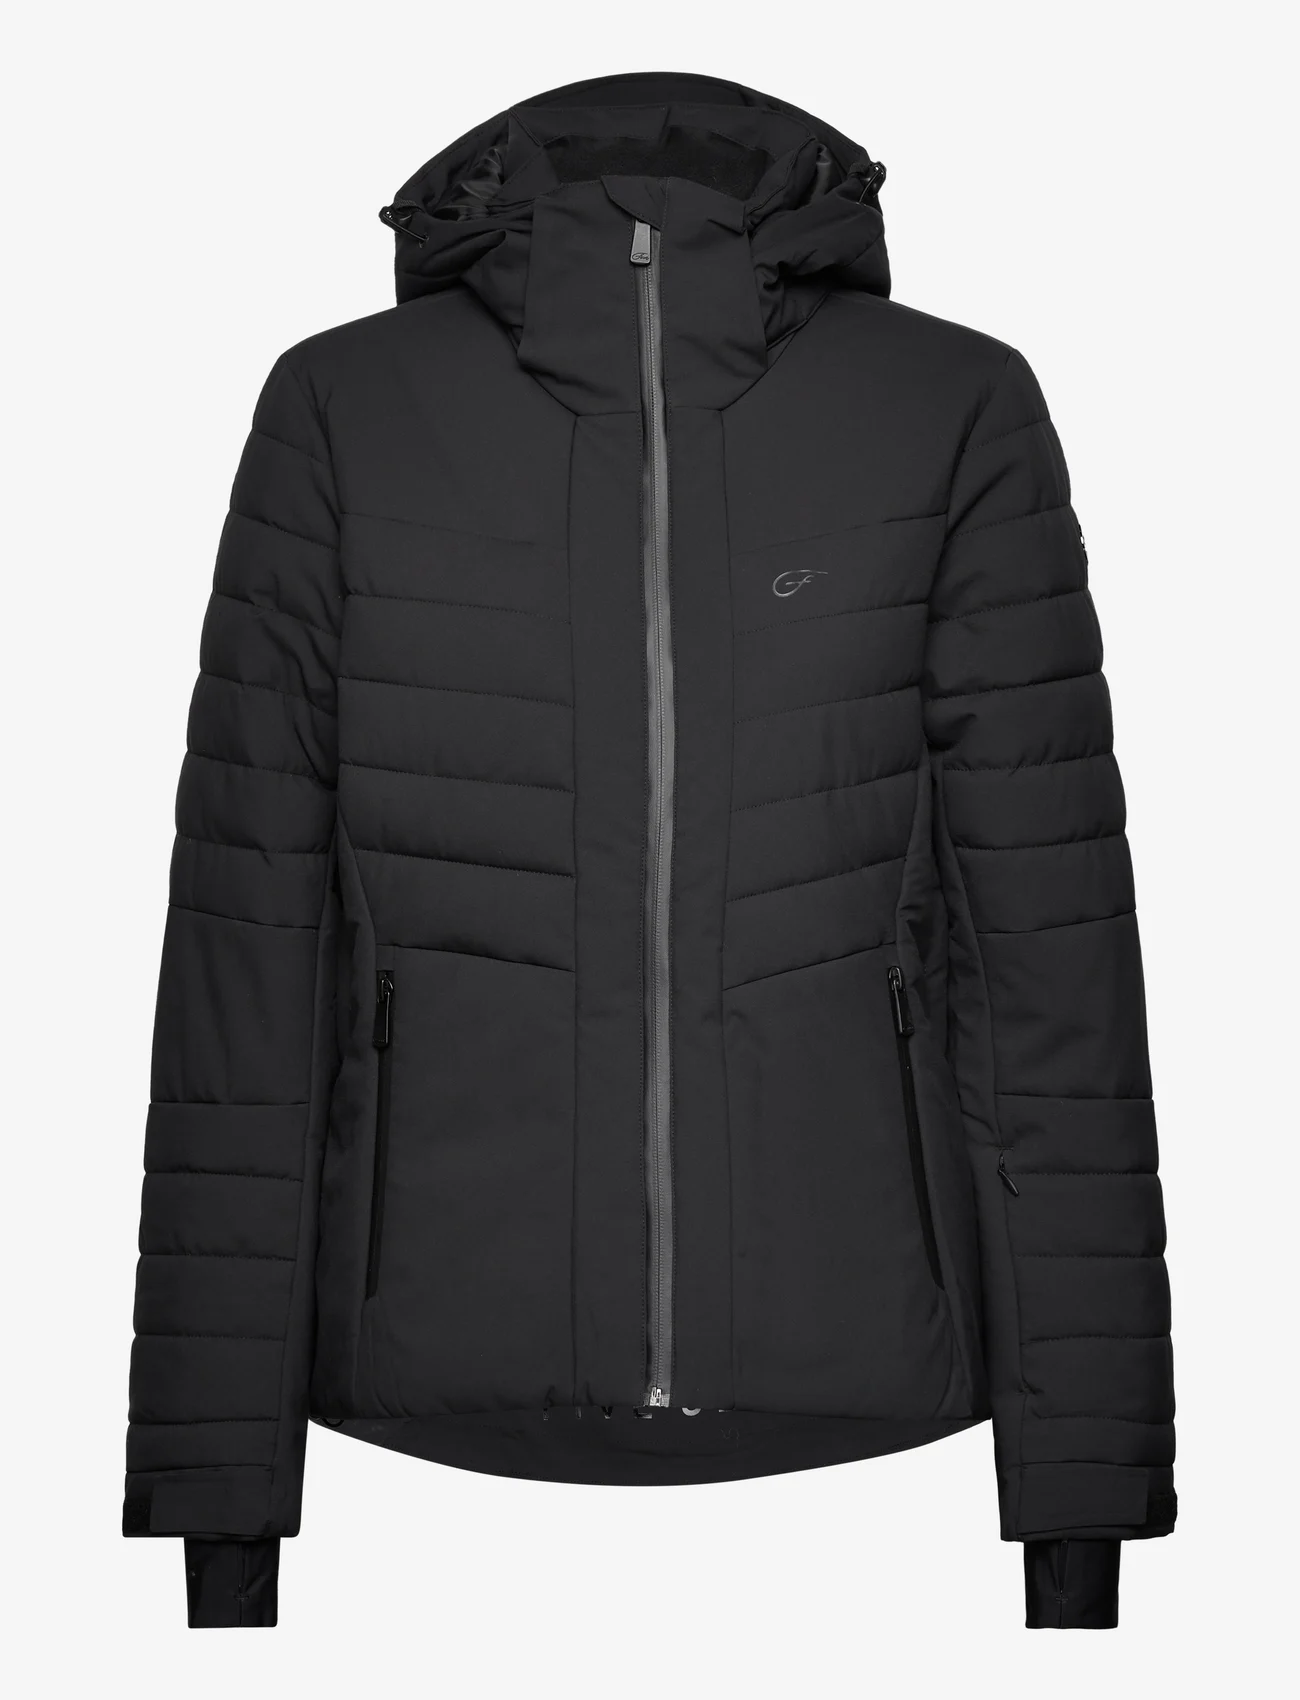 Five Seasons - CHARMEY JKT W - spring jackets - black - 0